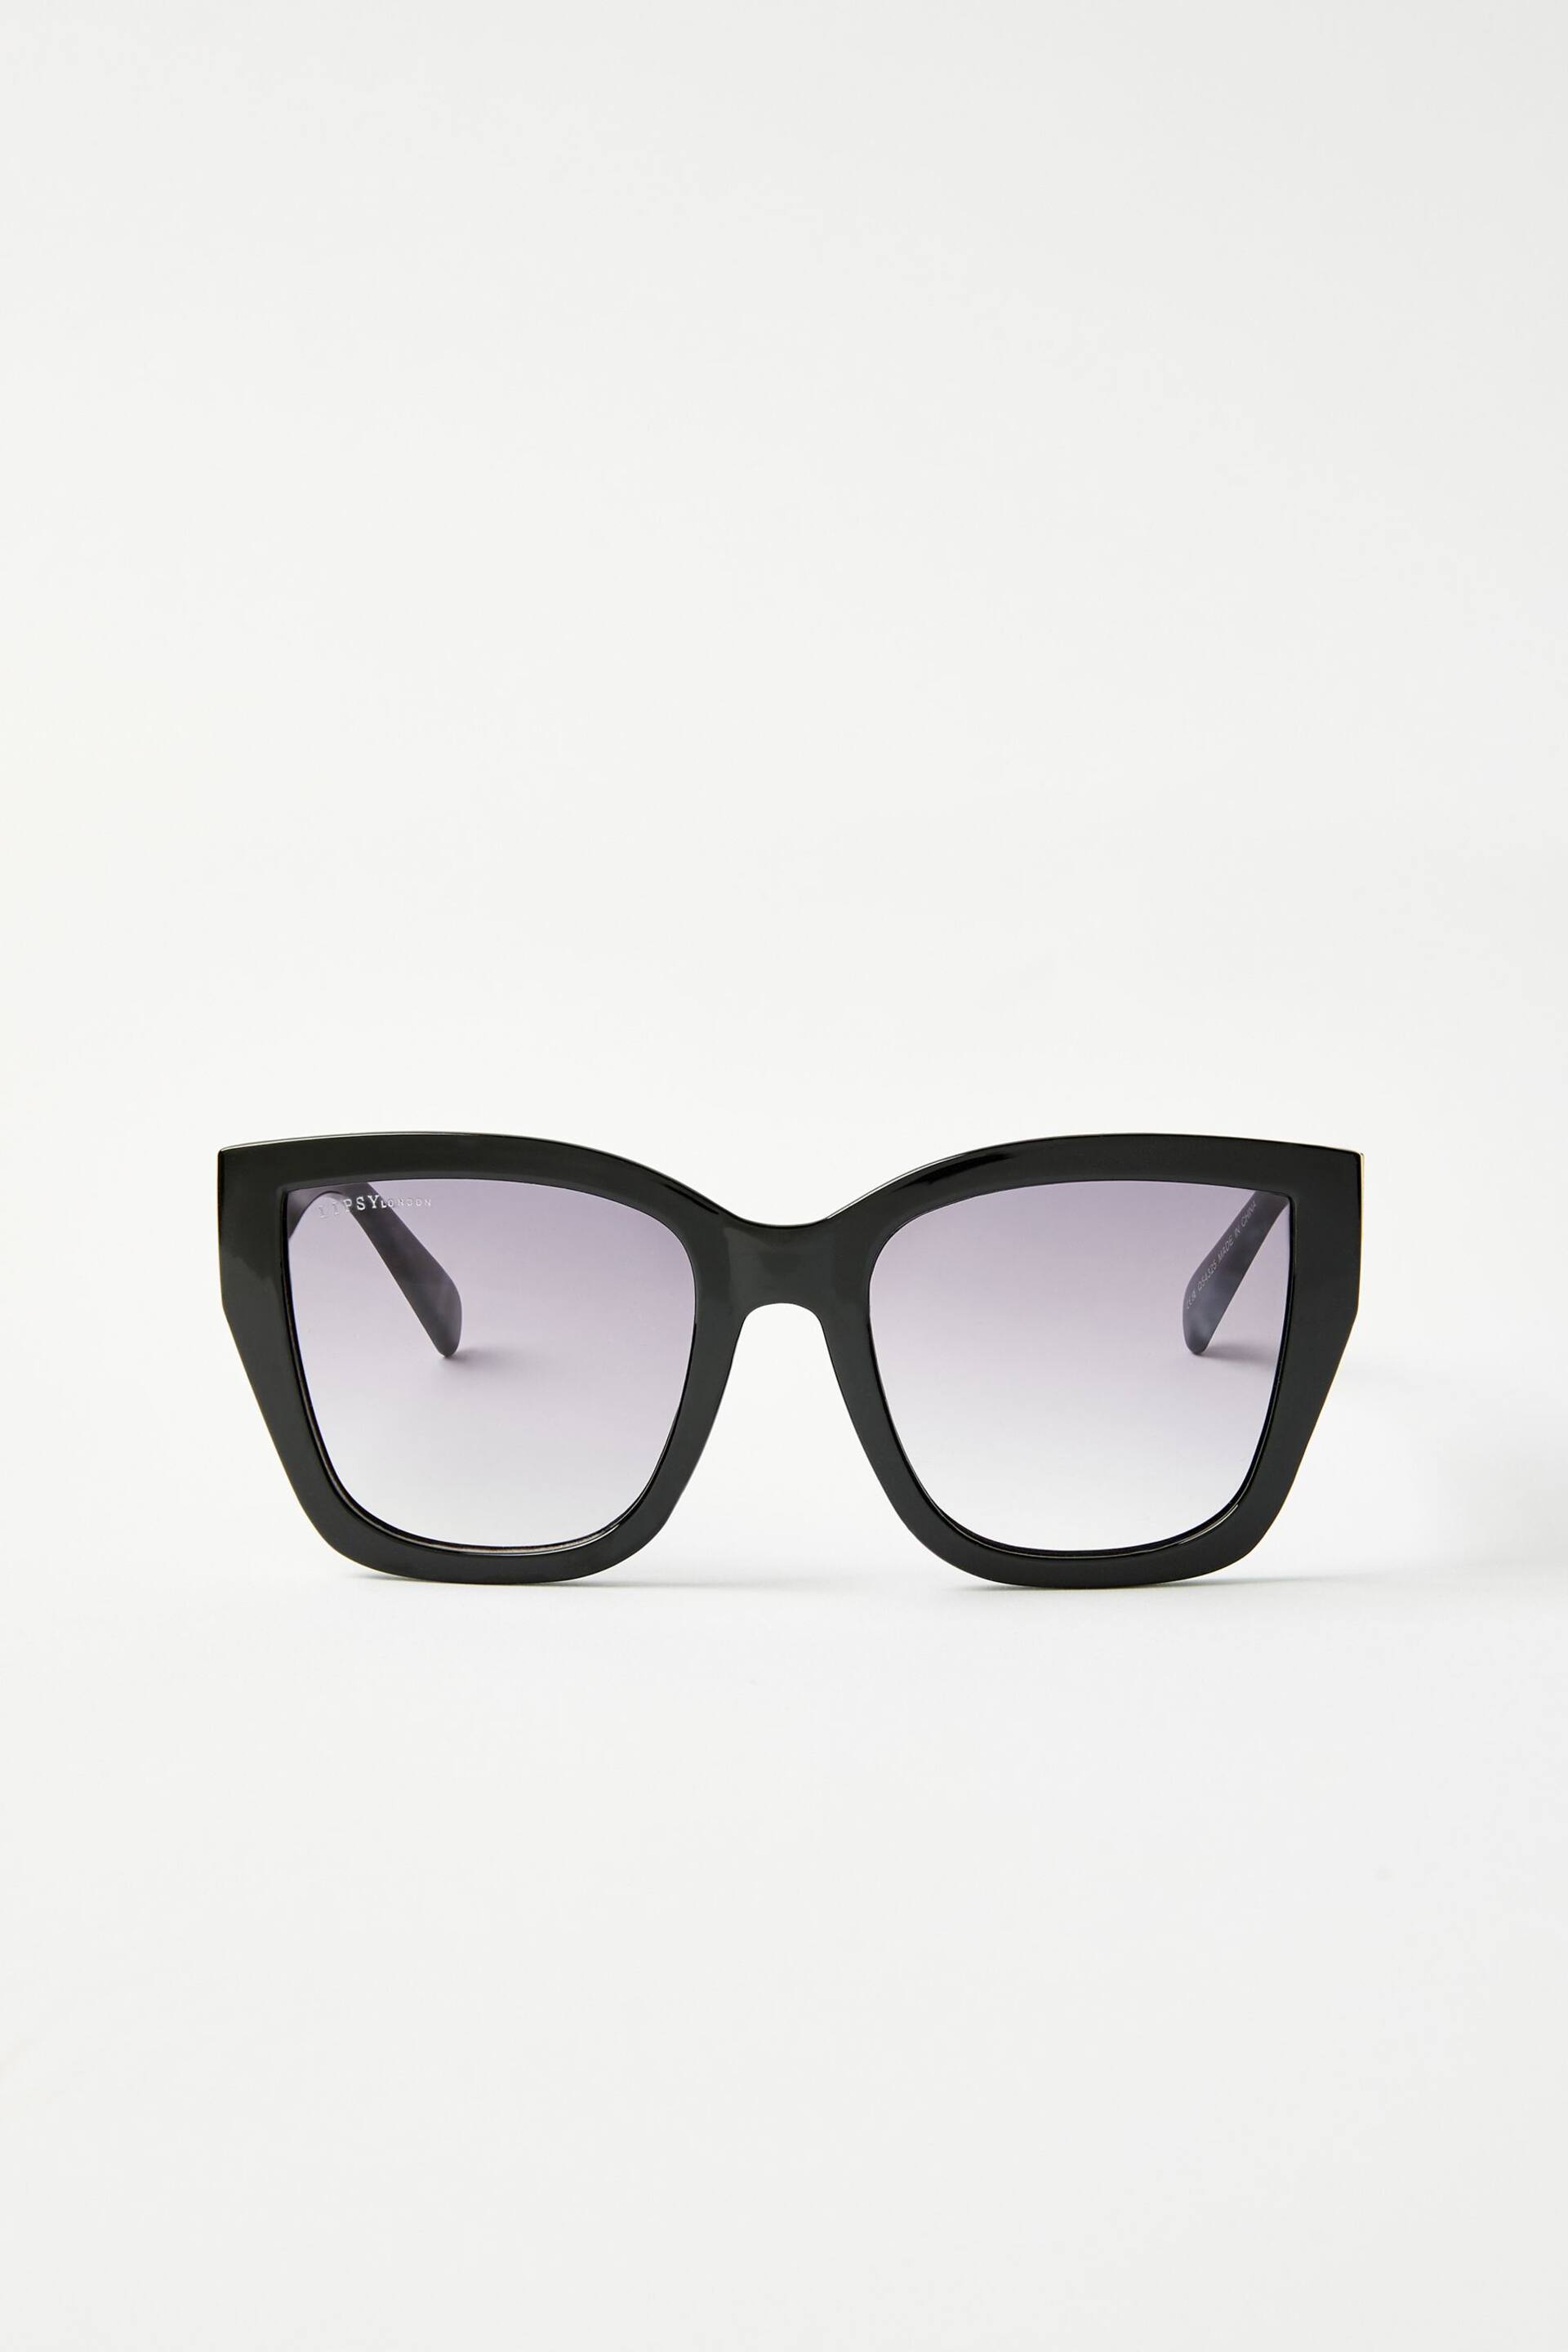 Lipsy Black Oversized Square Chain Sunglasses - Image 5 of 5